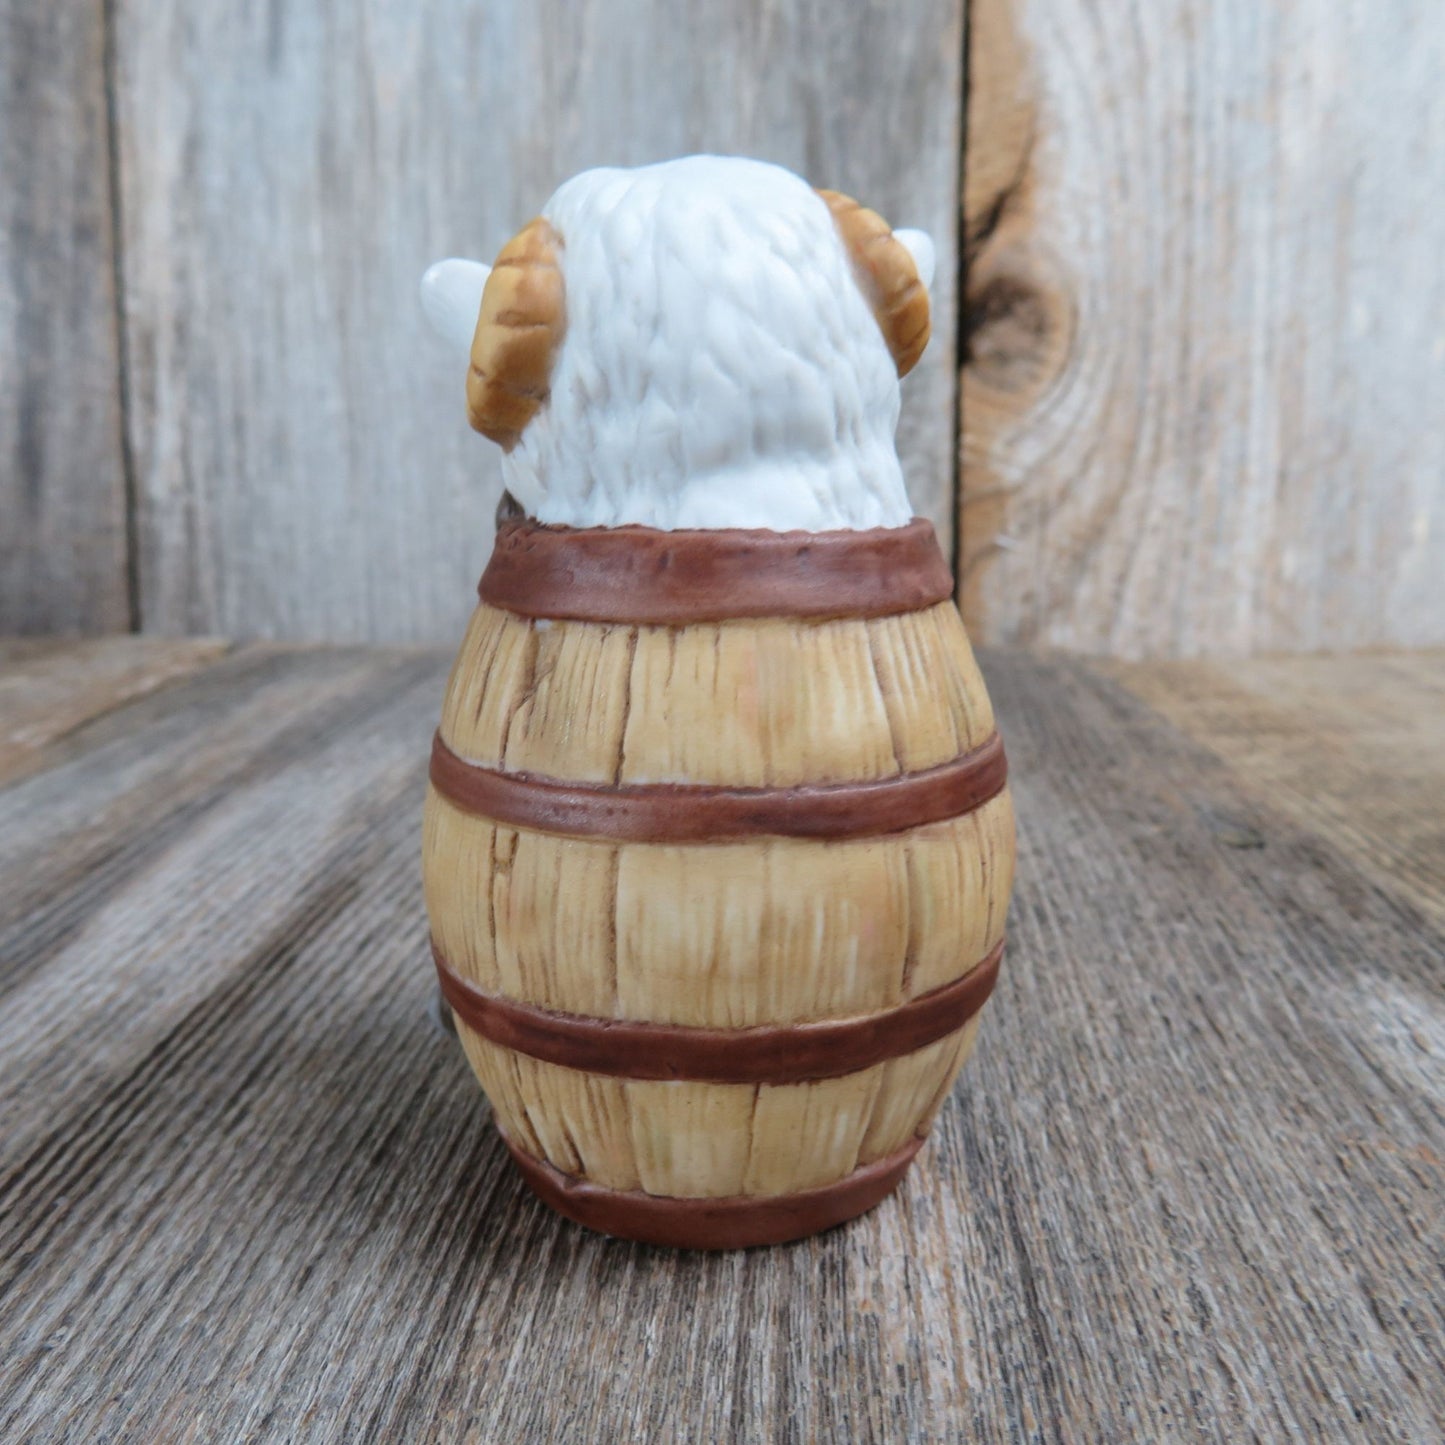 Vintage Sheep in a Barrel Figurine Ram with Horns Wooden Wine Keg Ceramic